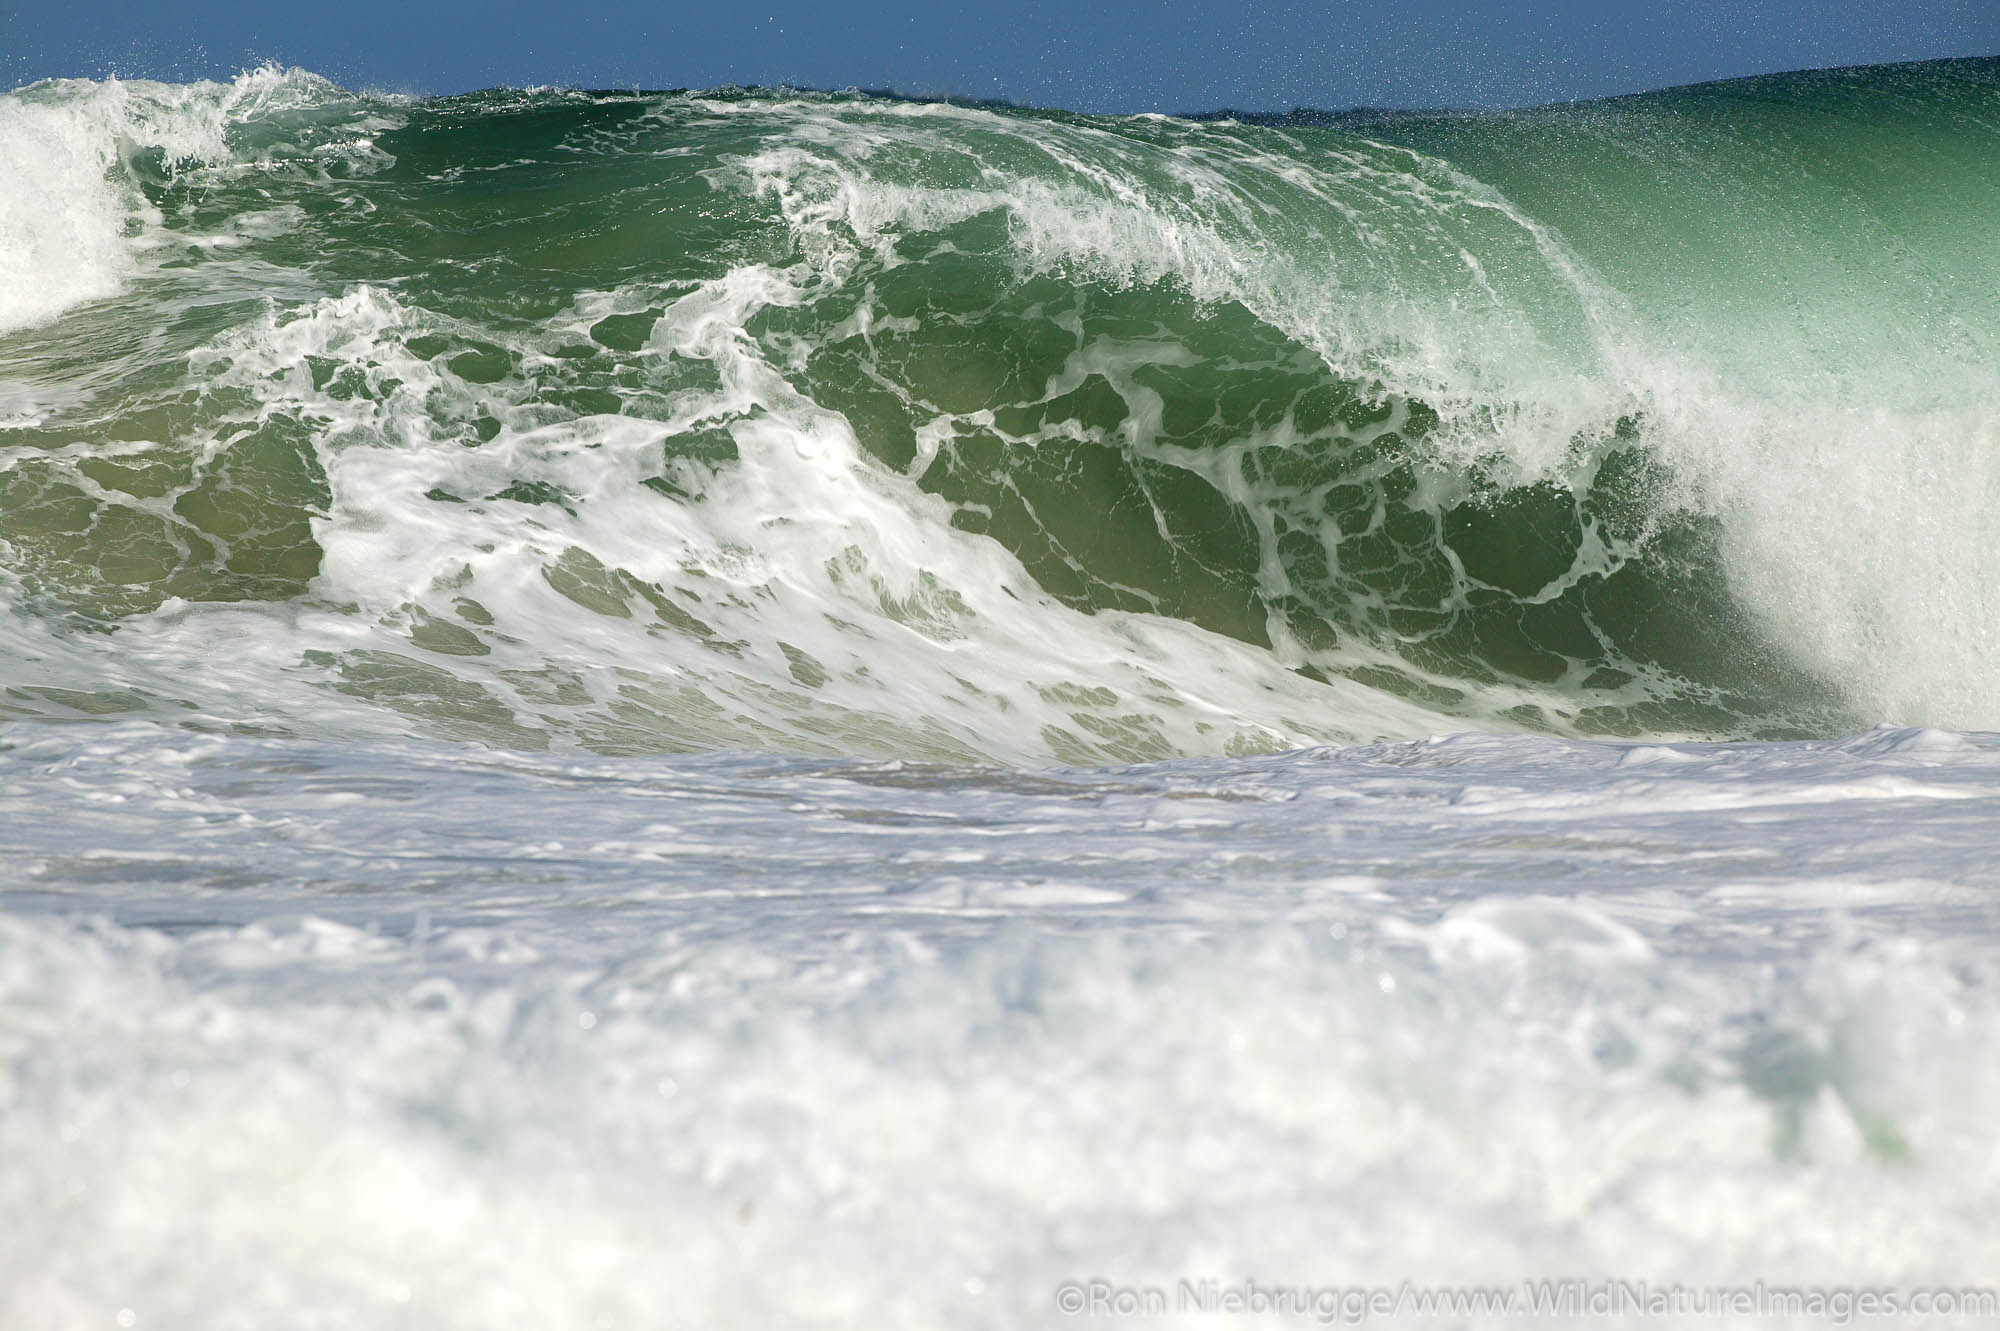 Waves crashing on beach.  Garrapata State Park, Big Sur Coast, California.